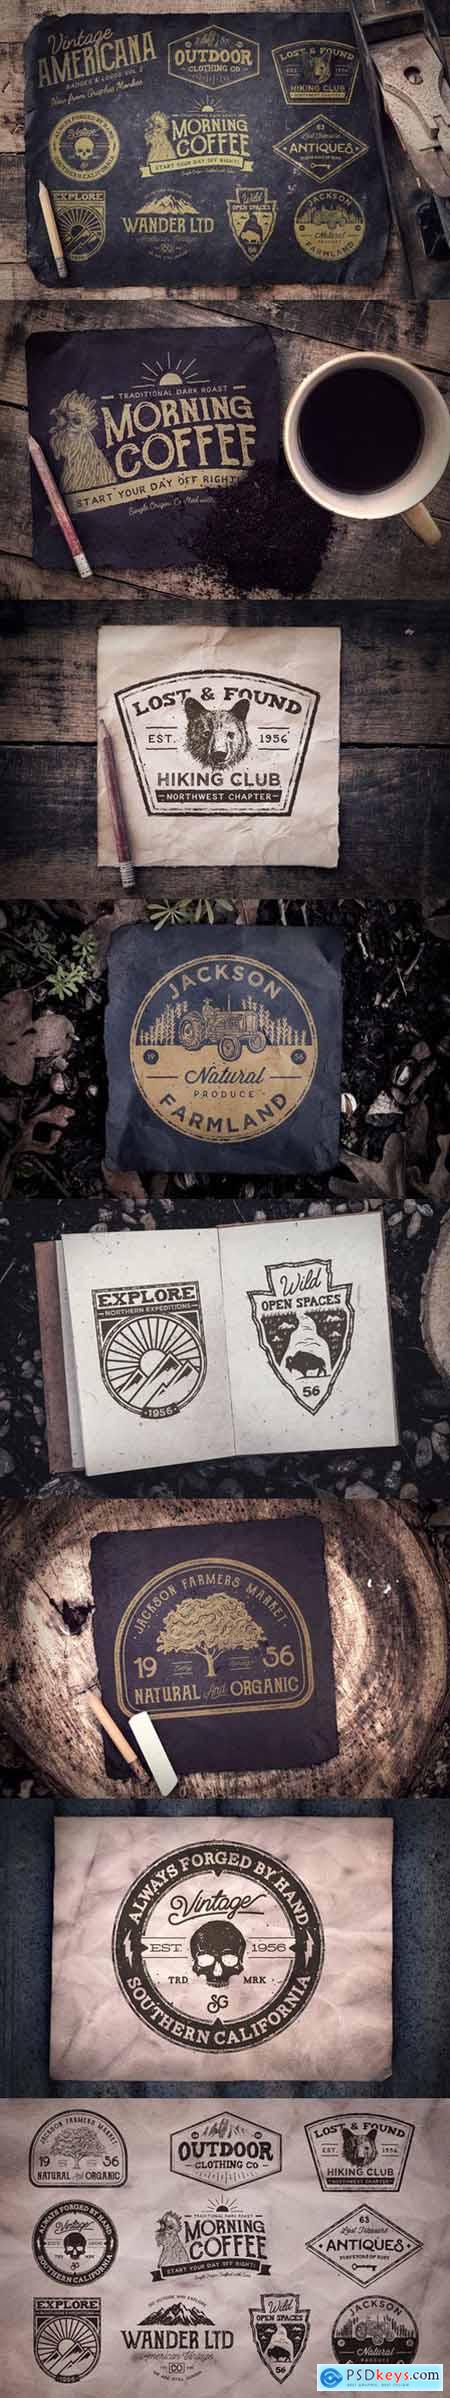 Vintage Americana Badges and Logos 2